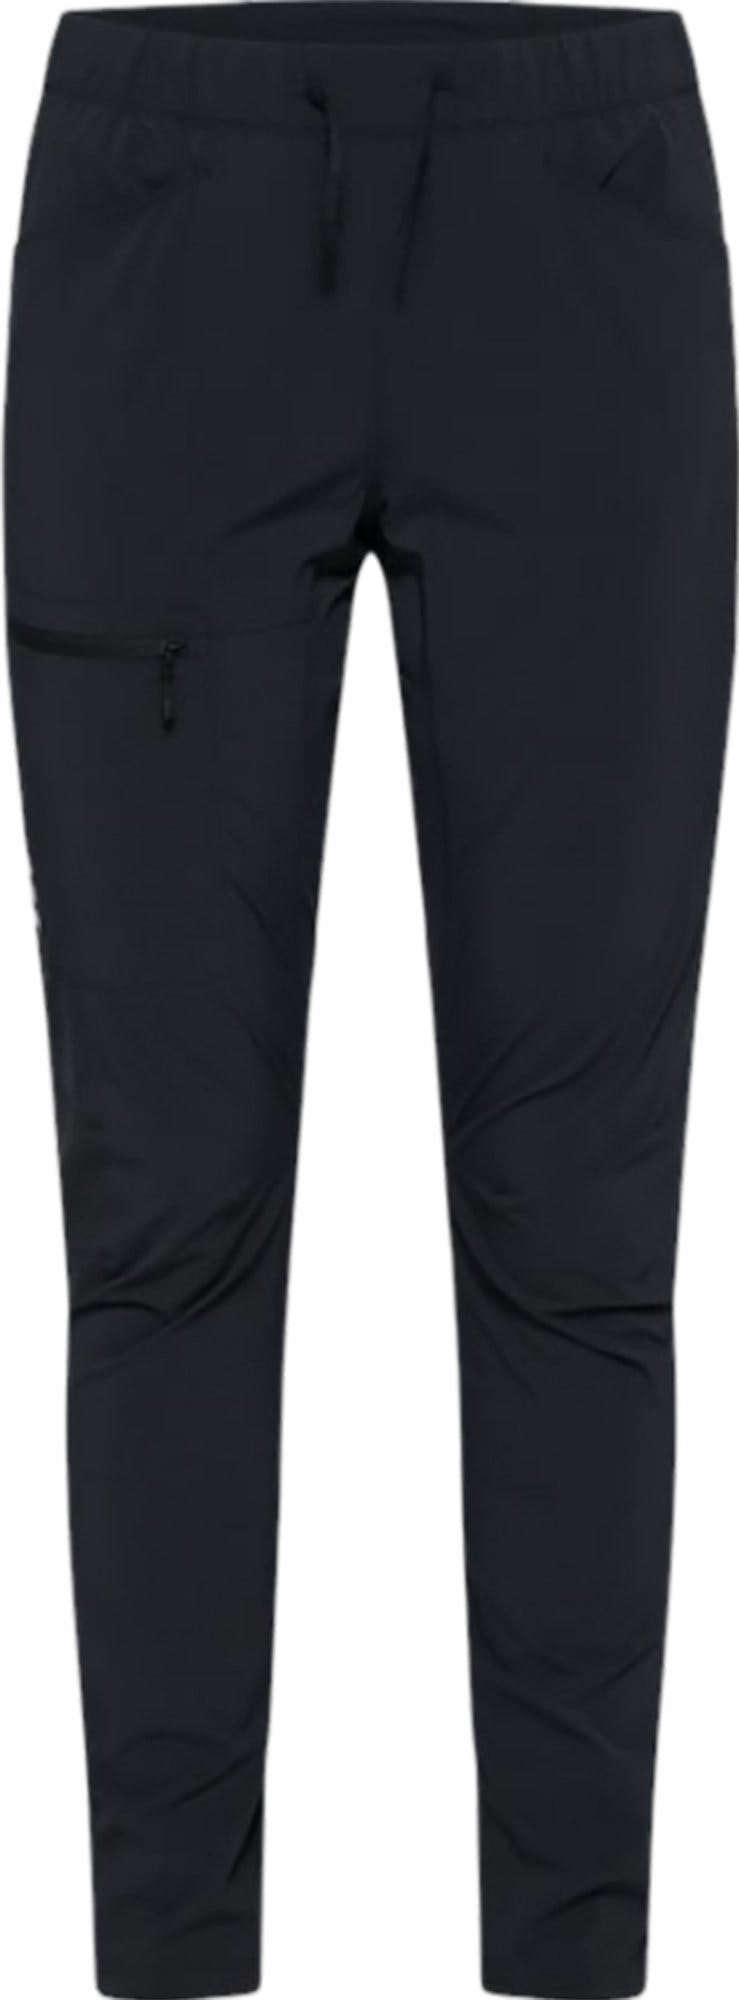 Product image for ROC Lite Slim Fit Pants - Women's